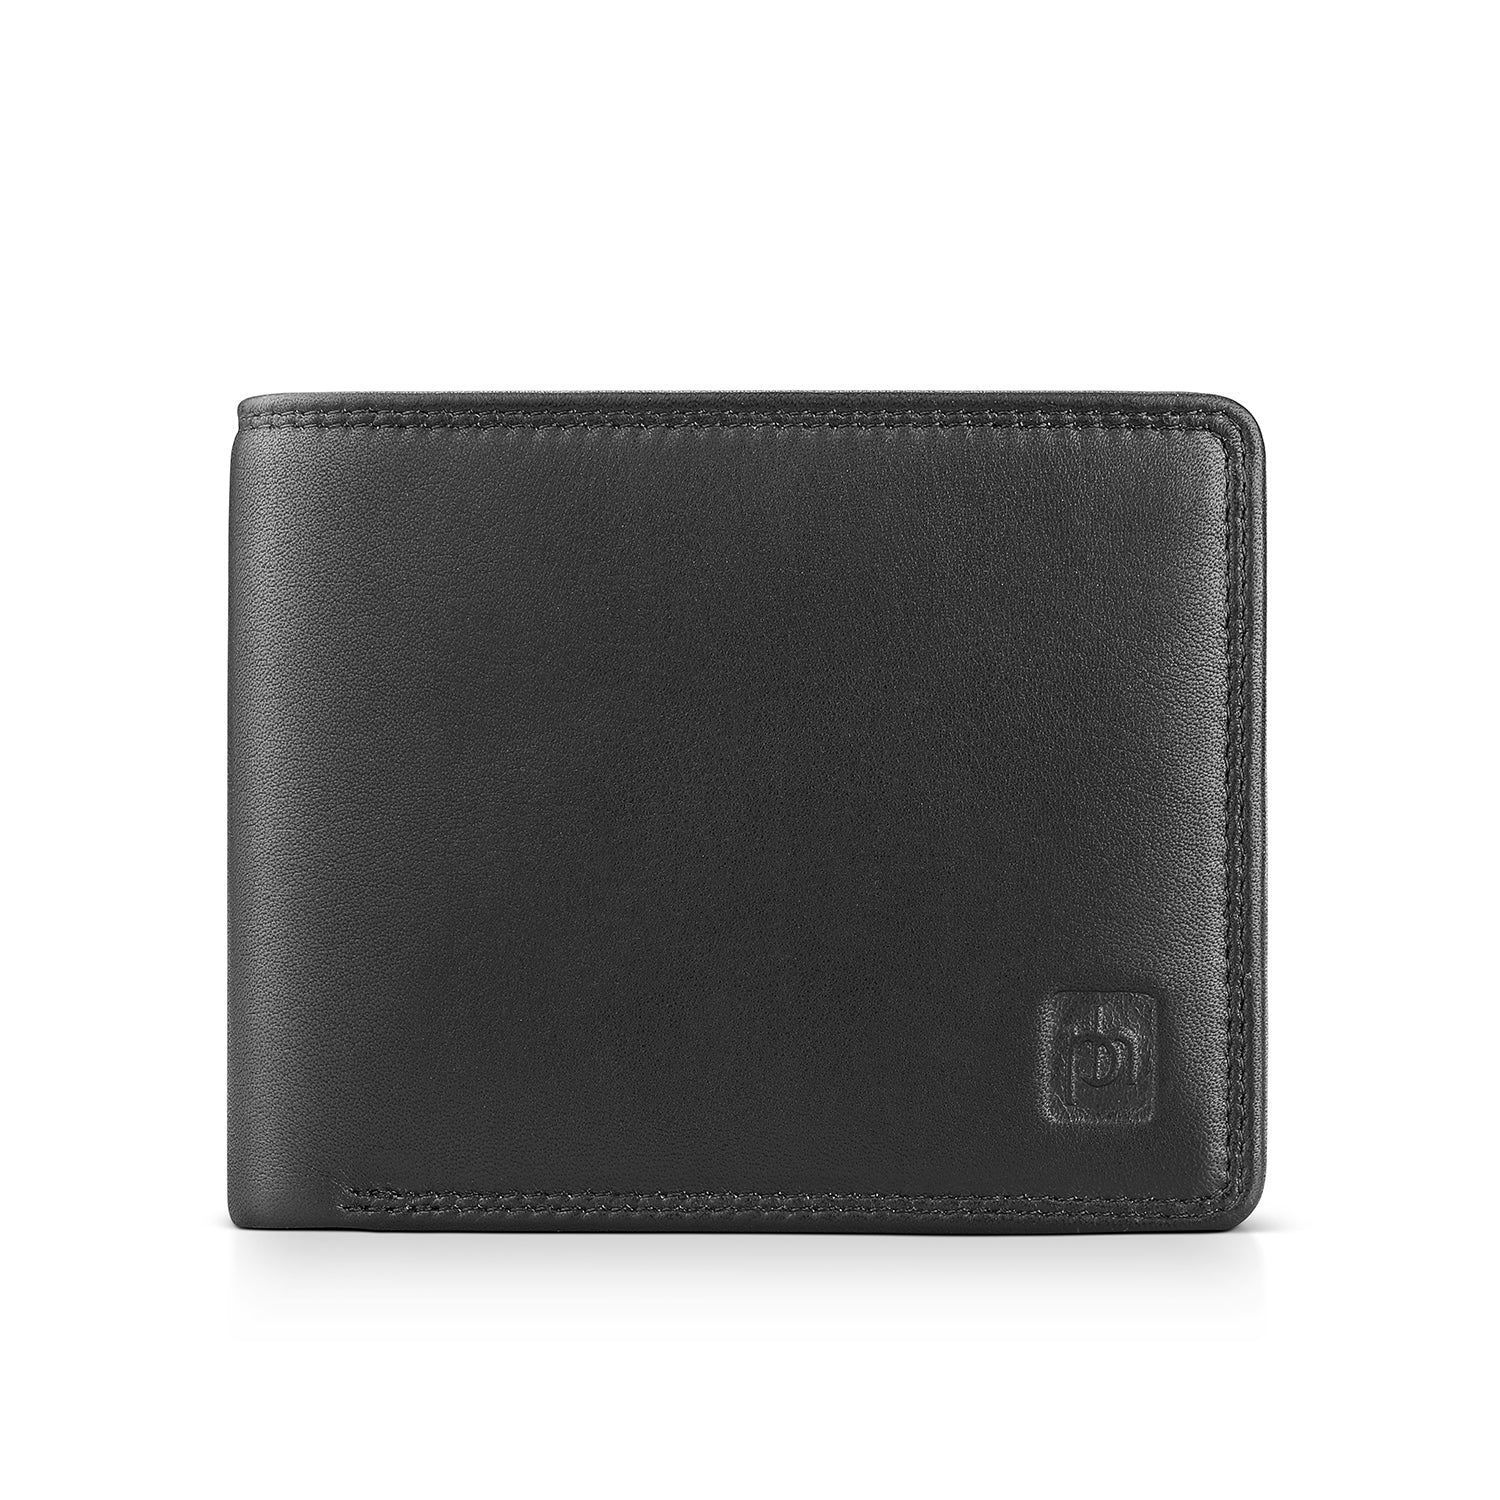 Washington Trifold RFID Leather Wallet - 3898